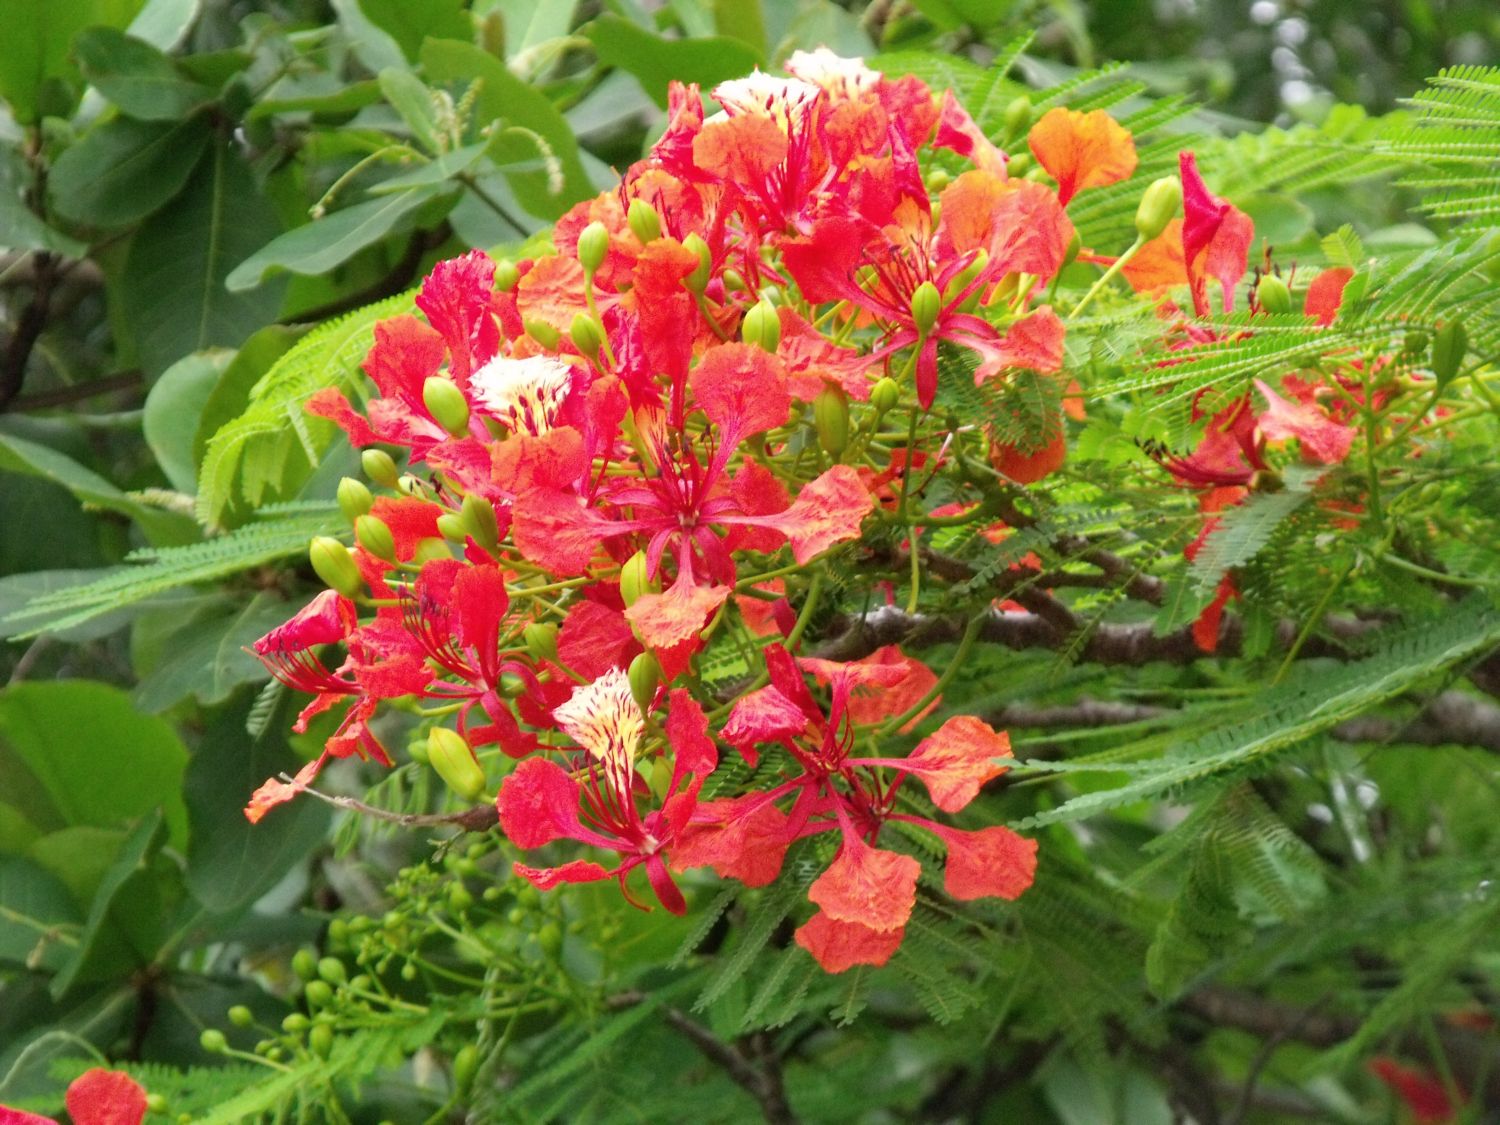 philipveerasingam: Flowering tree on the road to Negombo from Colombo ...